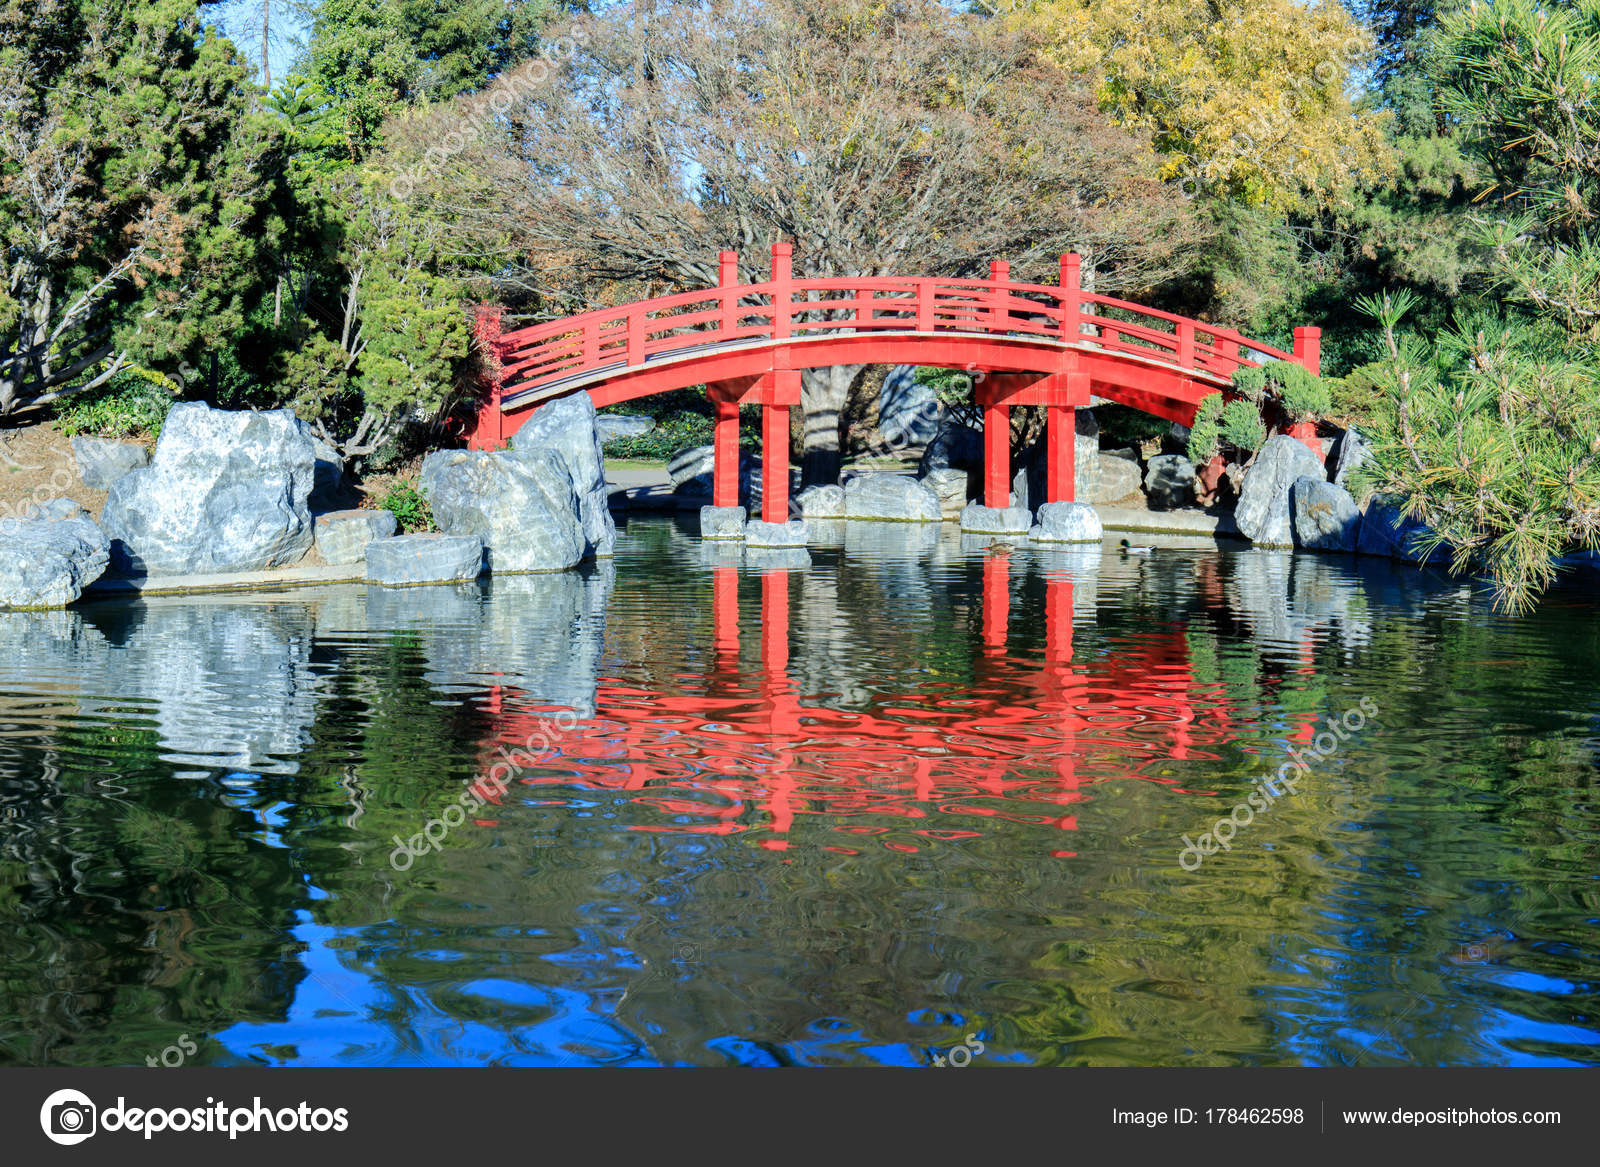 japanese friendship garden kelley park san jose santa clara county